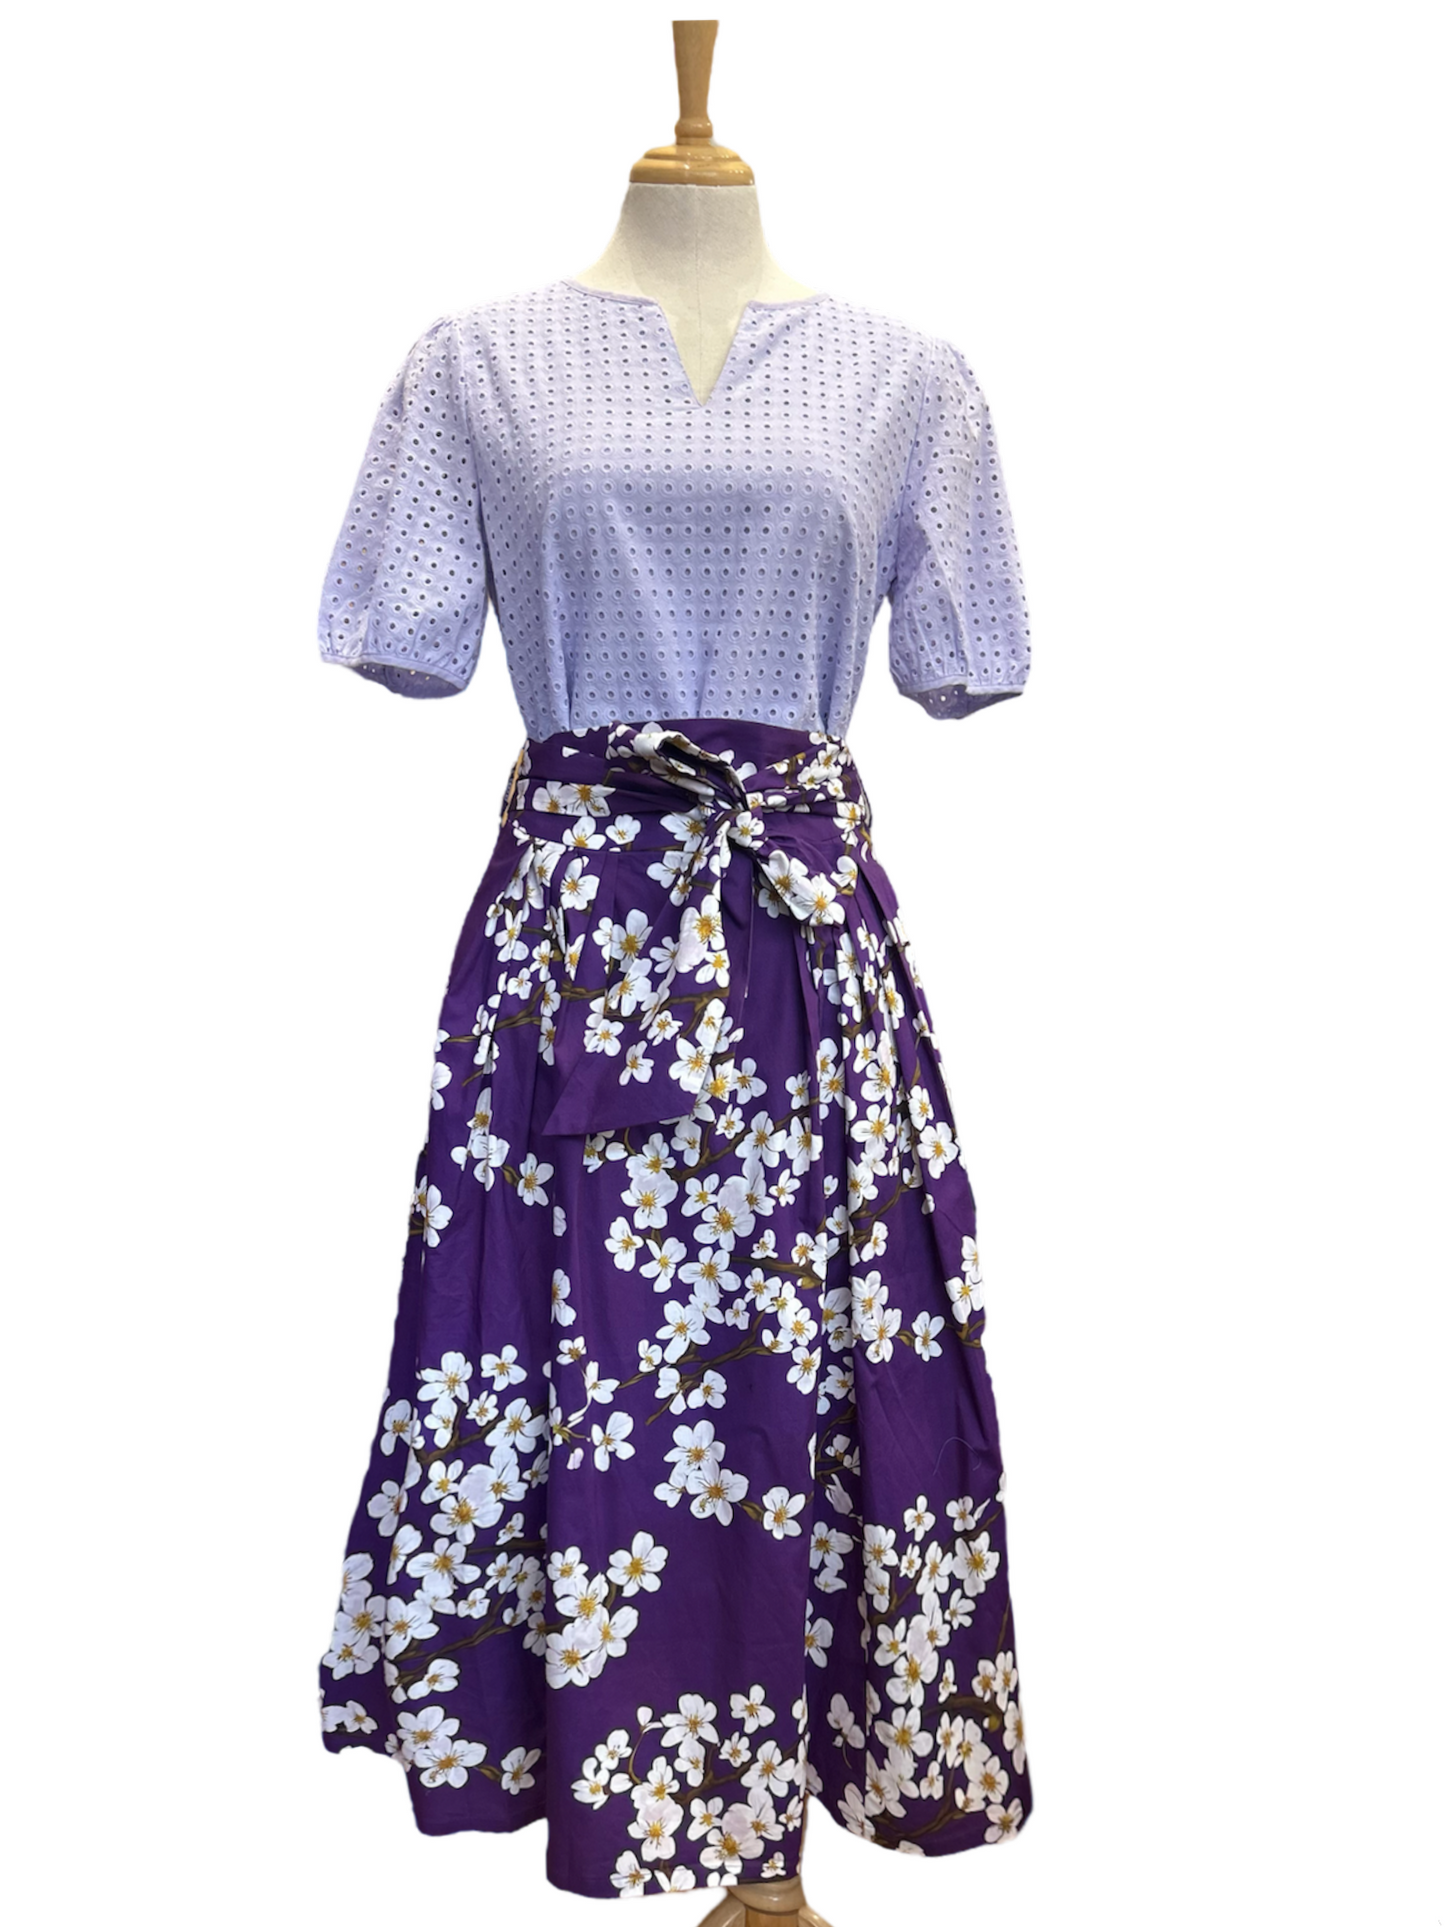 Camila Skirt - cherry blossom purple